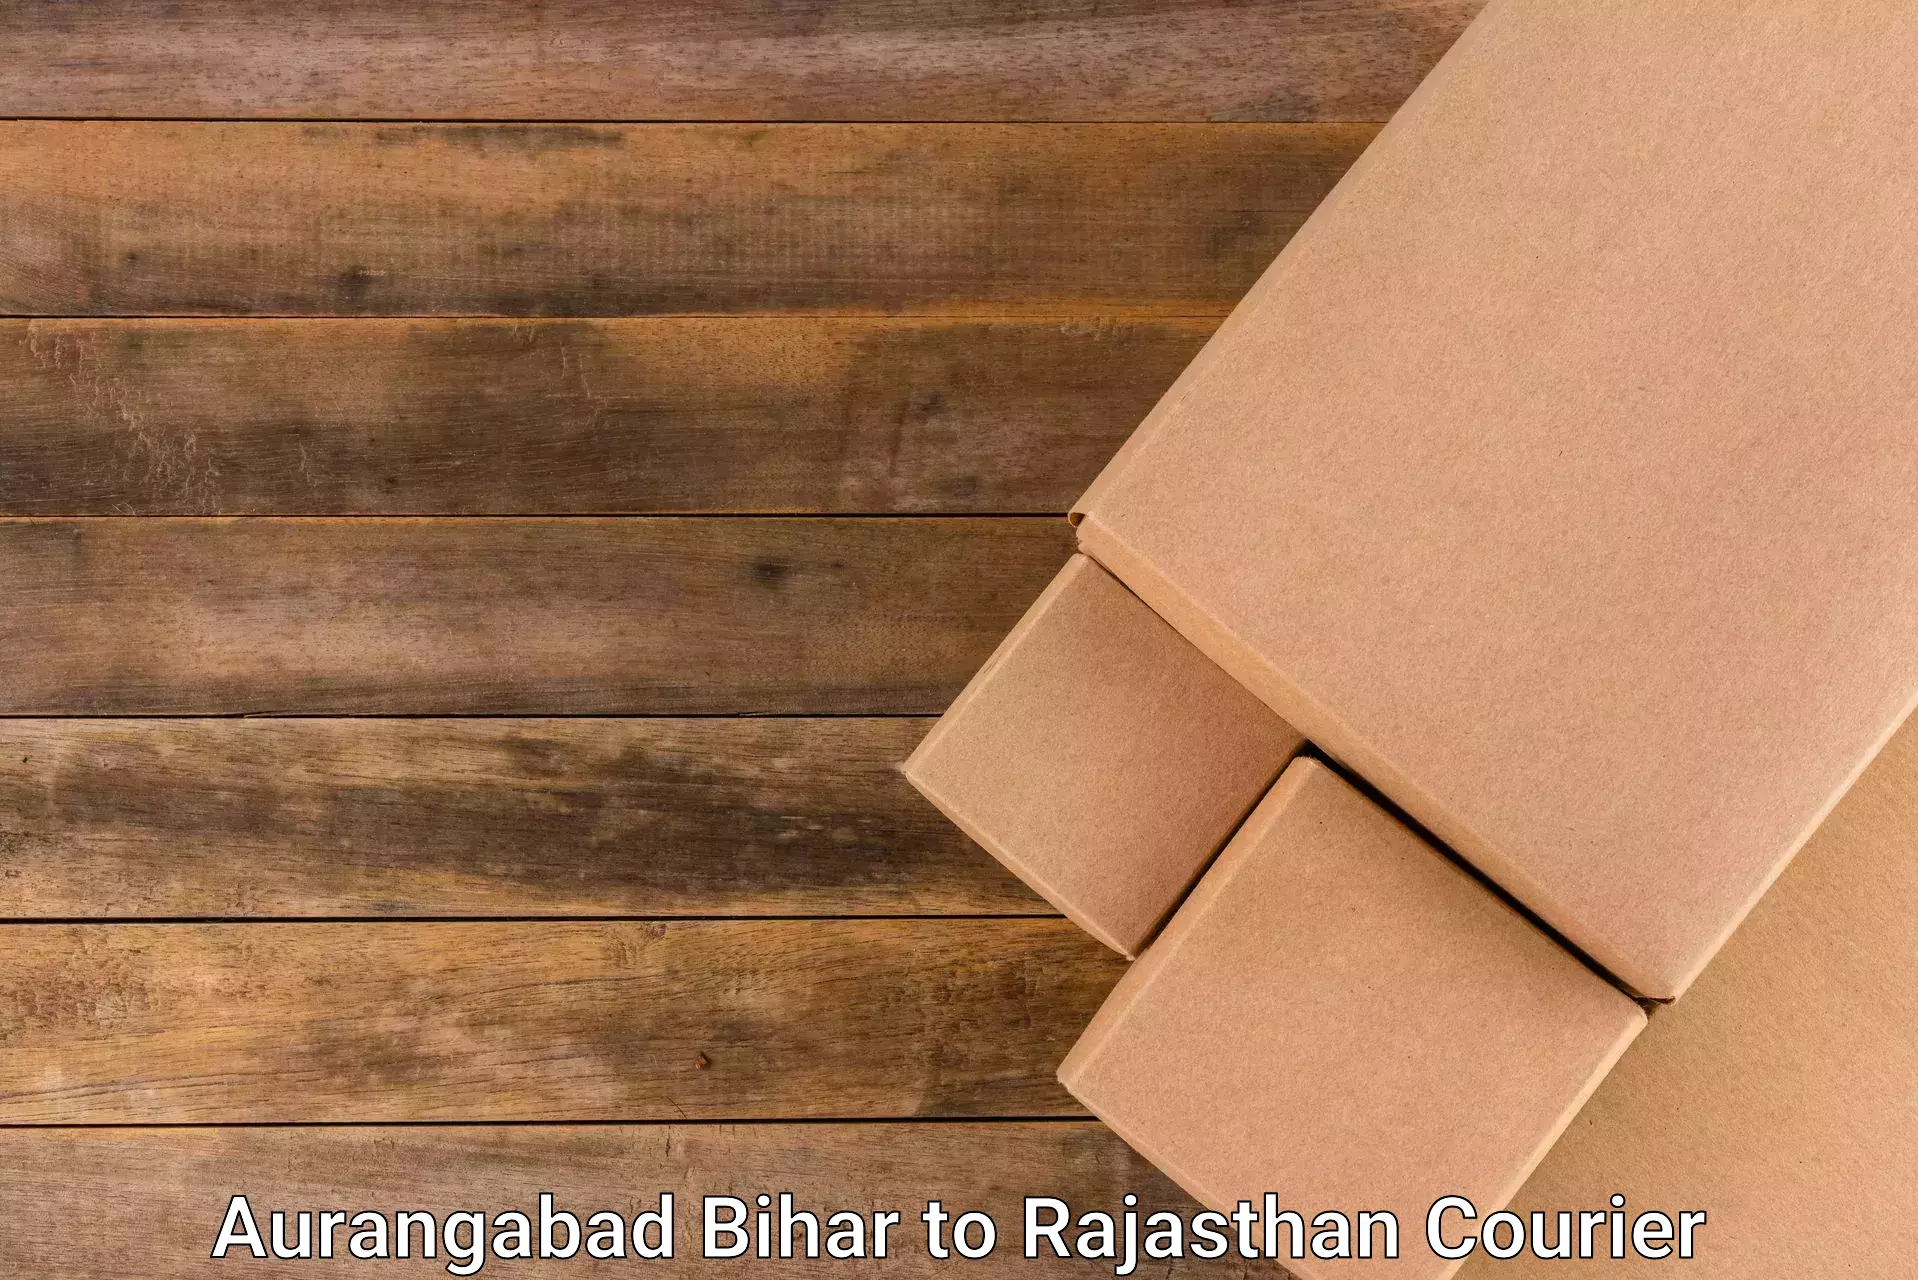 Logistics management in Aurangabad Bihar to Didwana